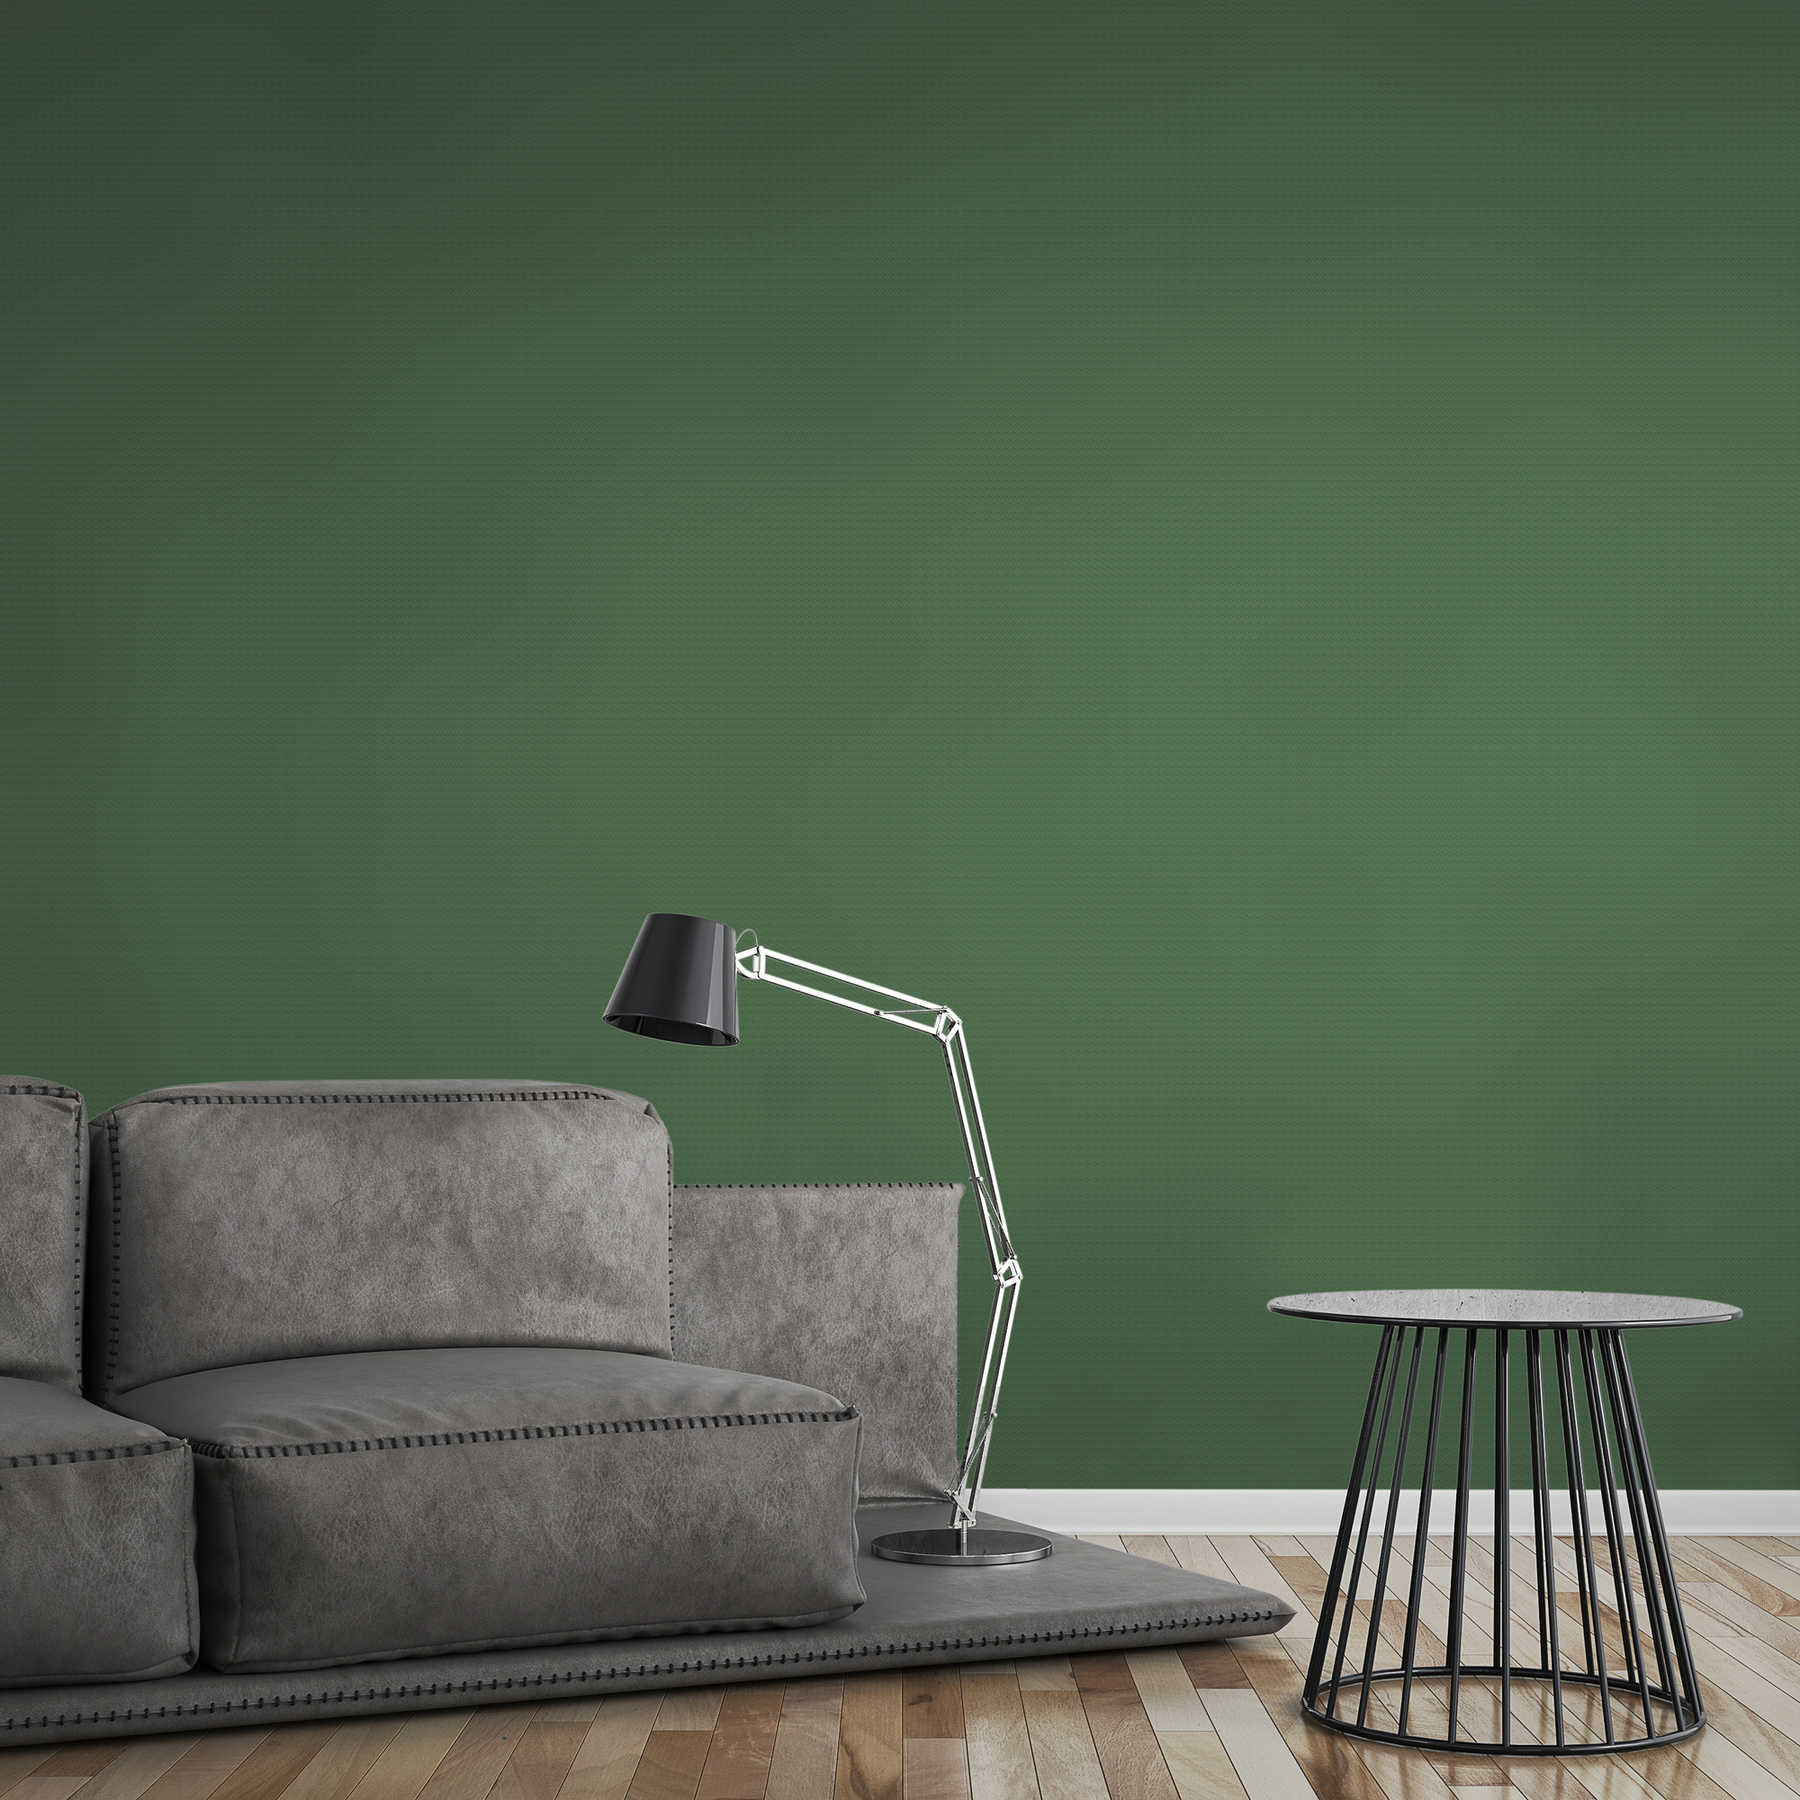             Wallpaper plain, textured with zigzag design - green
        